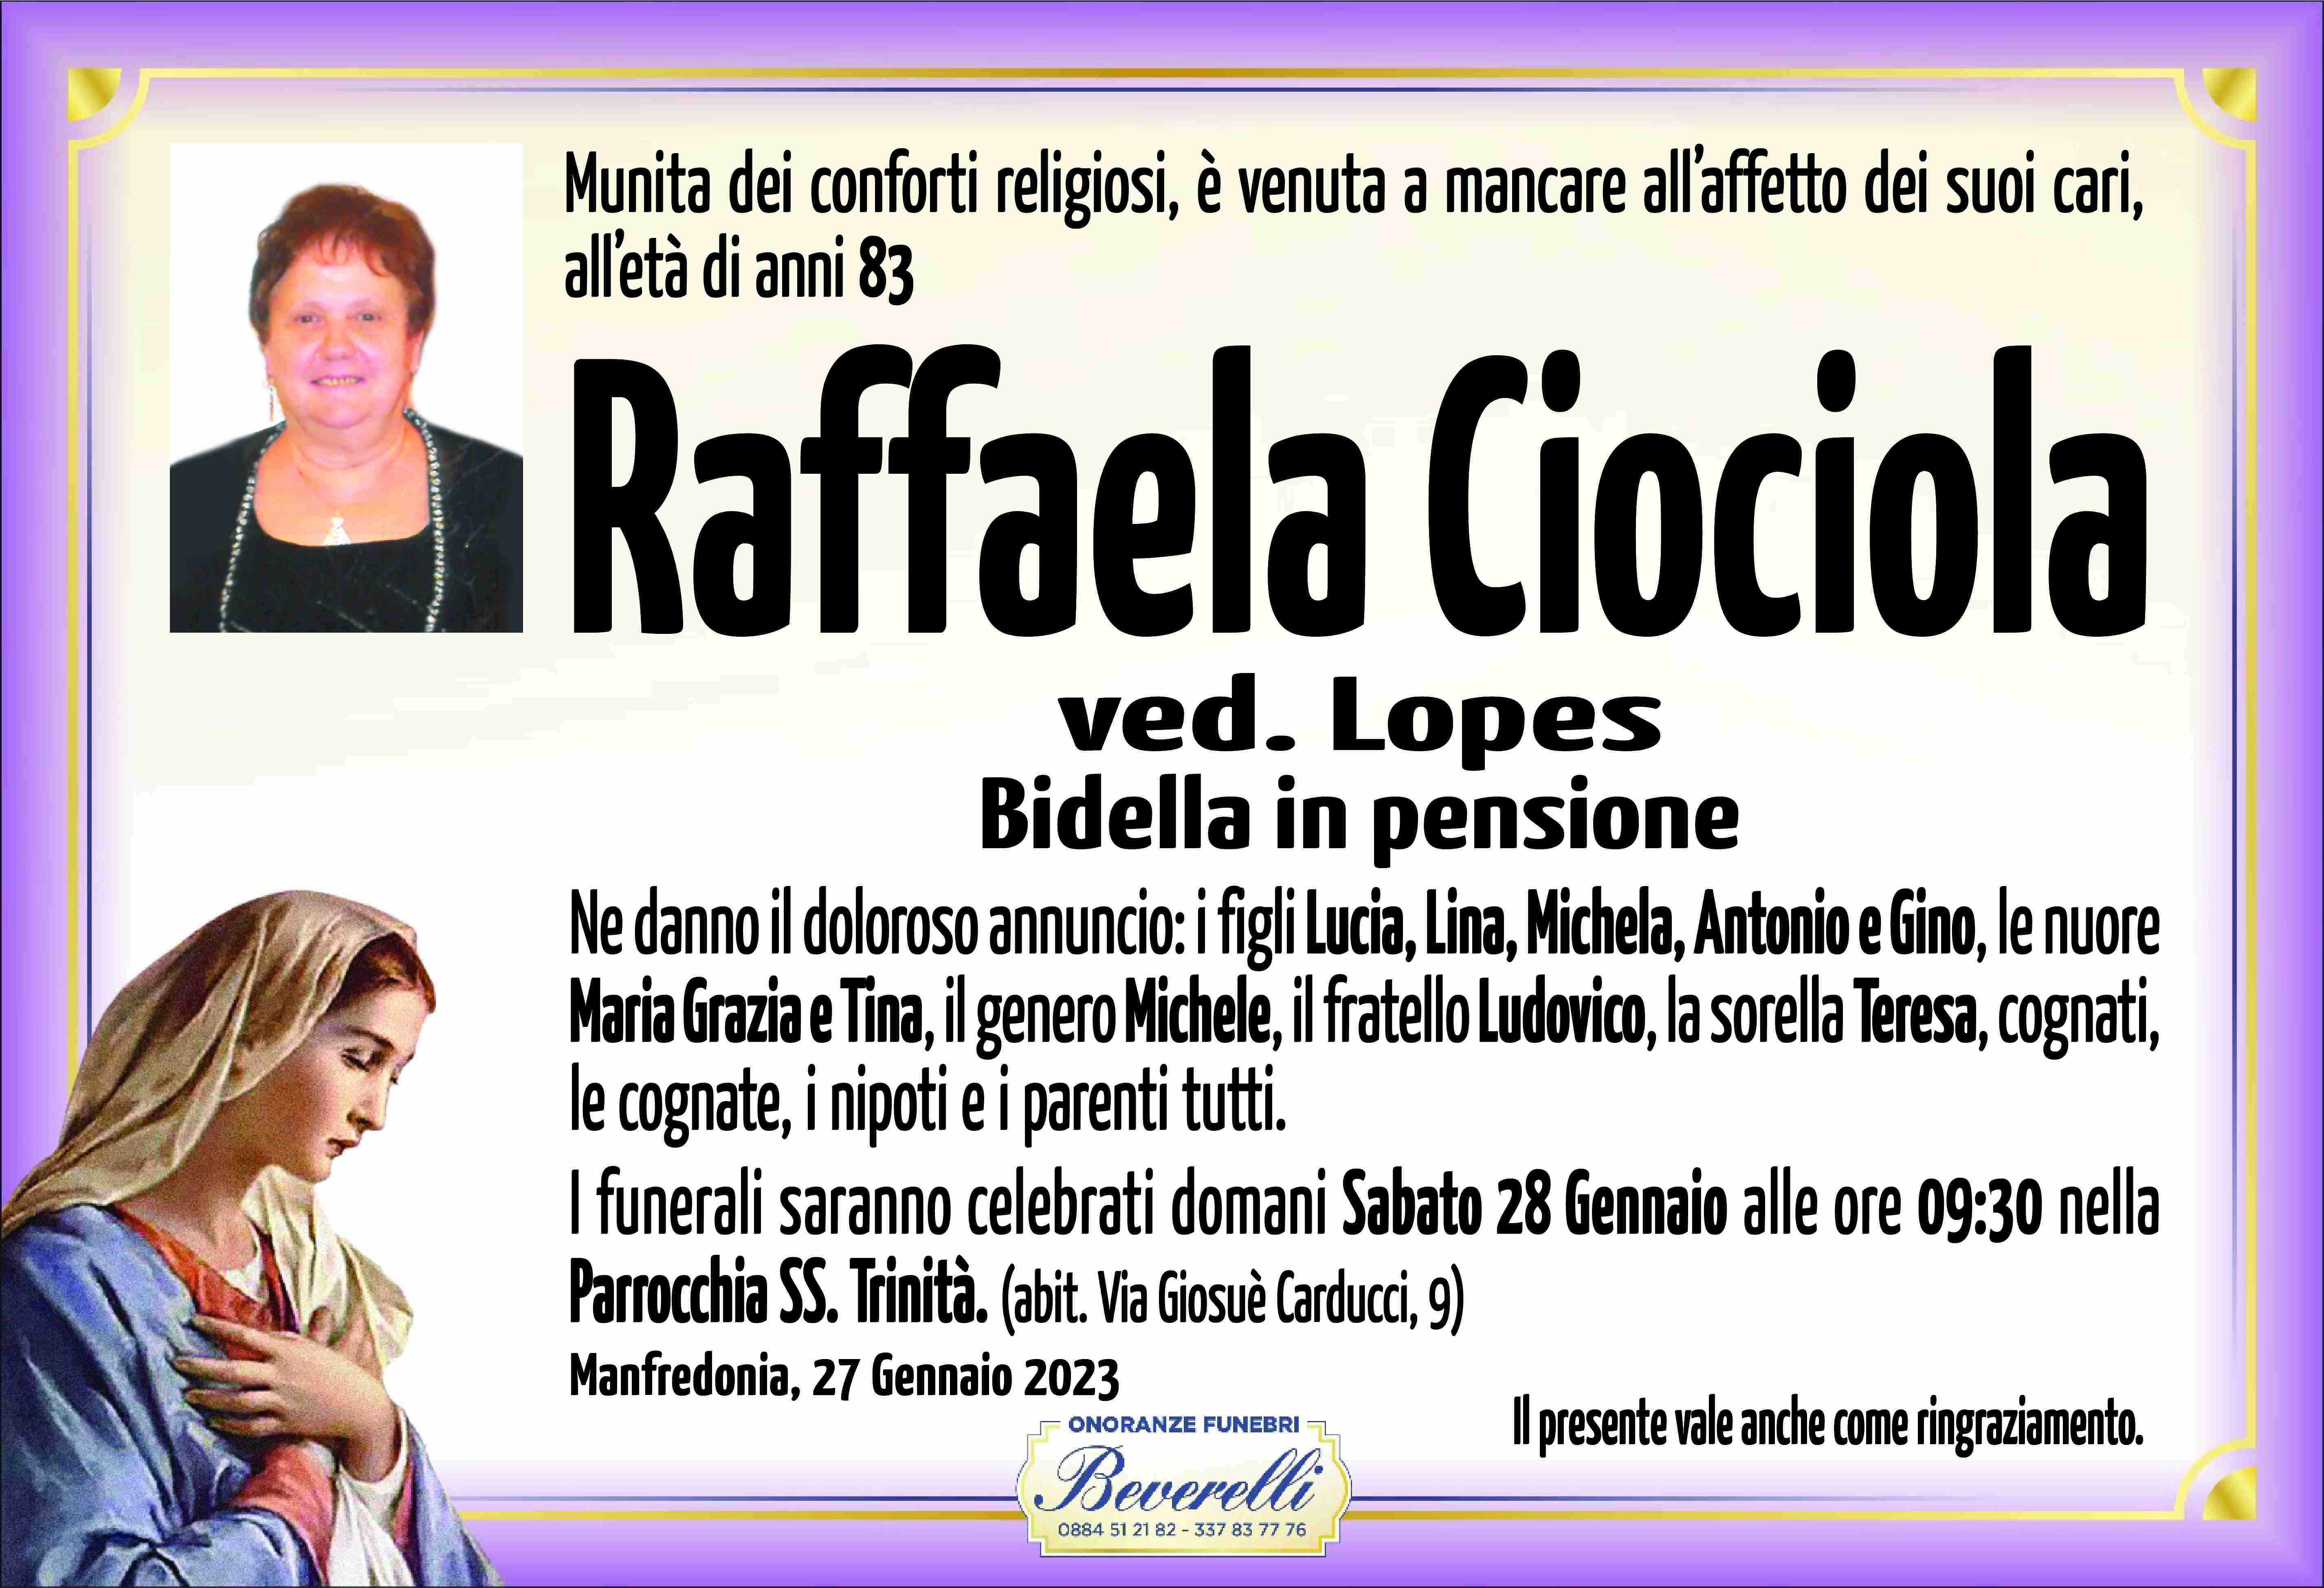 Raffaela Ciociola